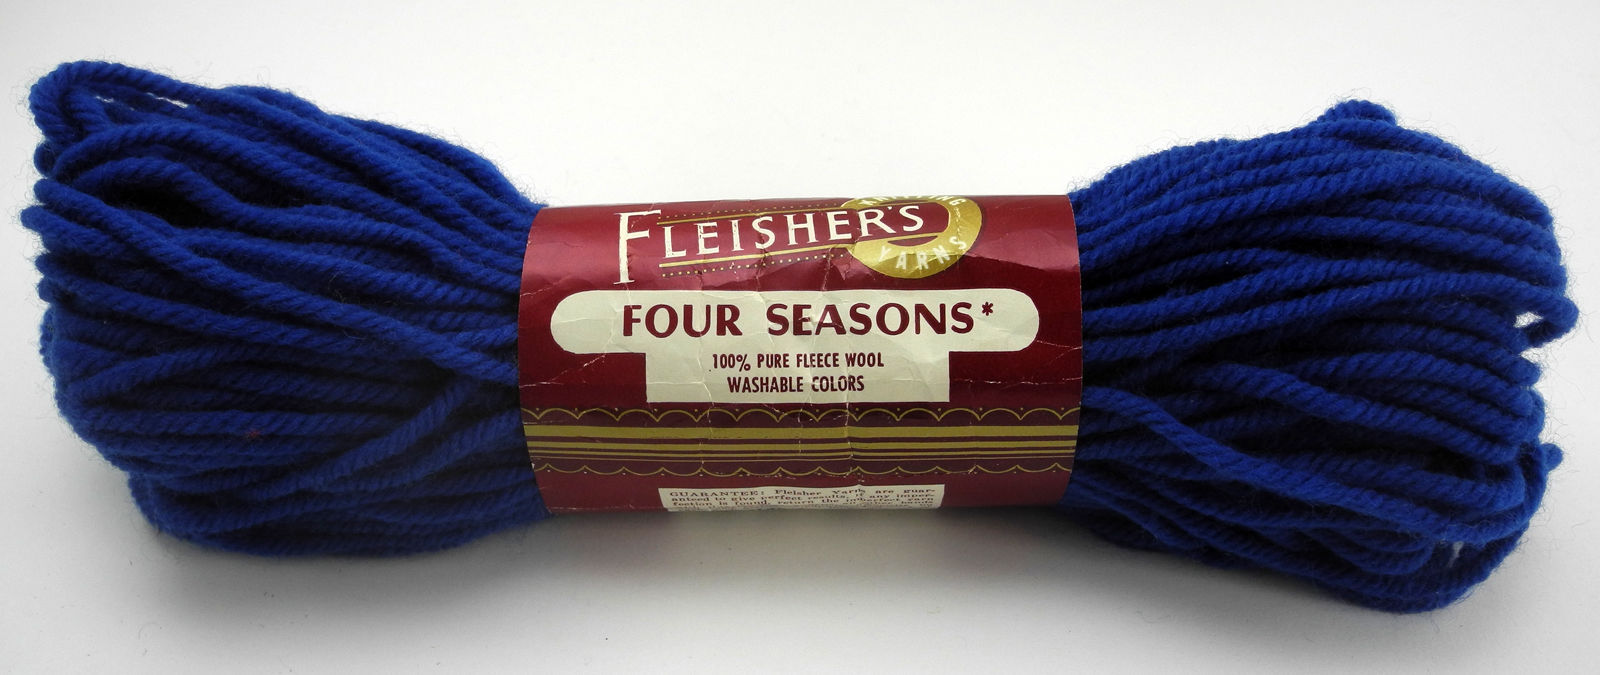 Fleisher's Four Seasons 100% Pure Fleece Wool Washable Yarn - 1 Skein Blue #509 - $8.50